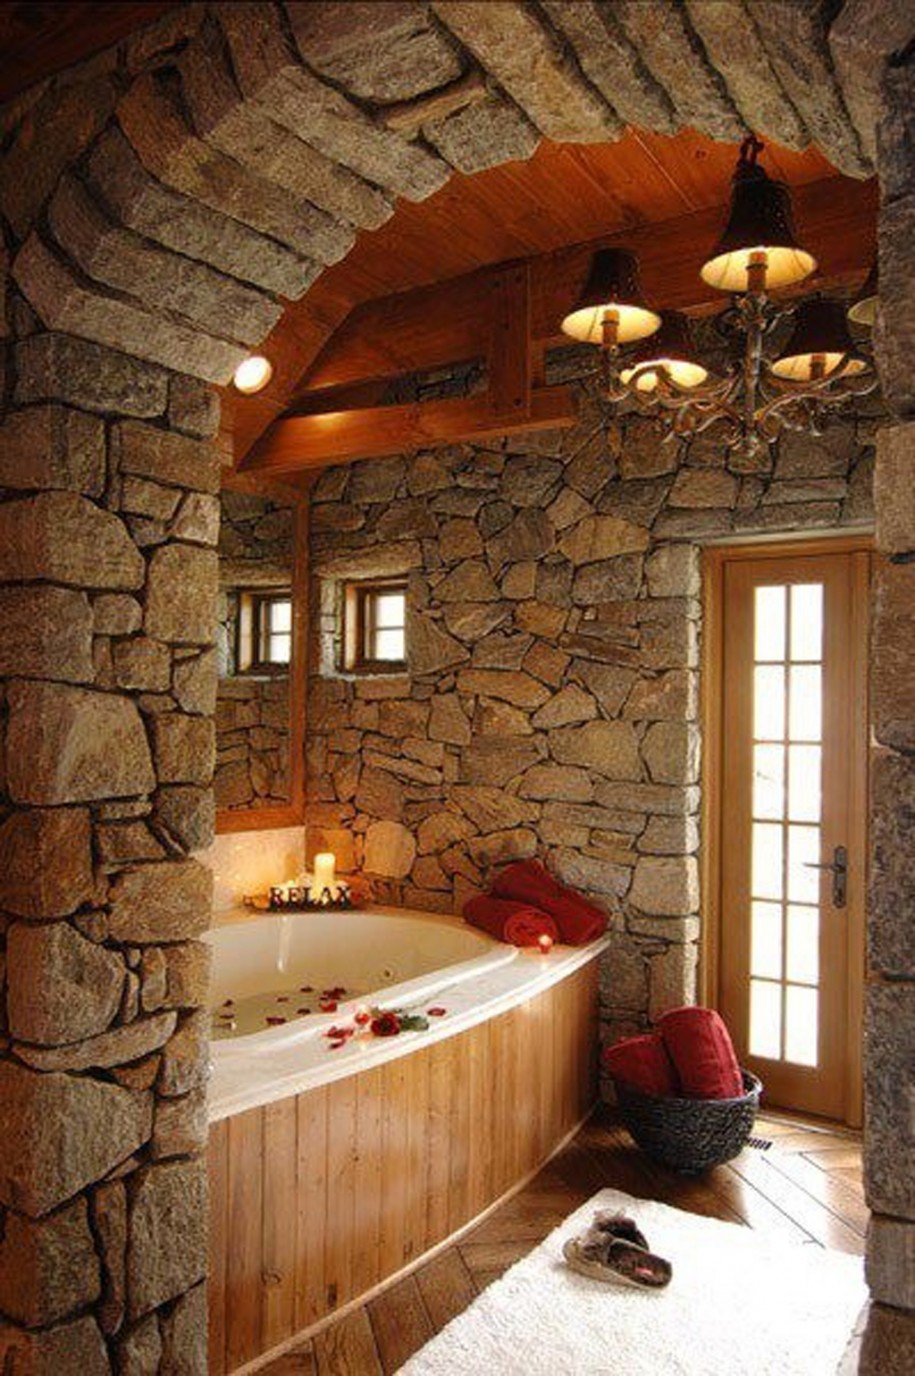 25 Rustic Bathroom Design Ideas - Decoration Love